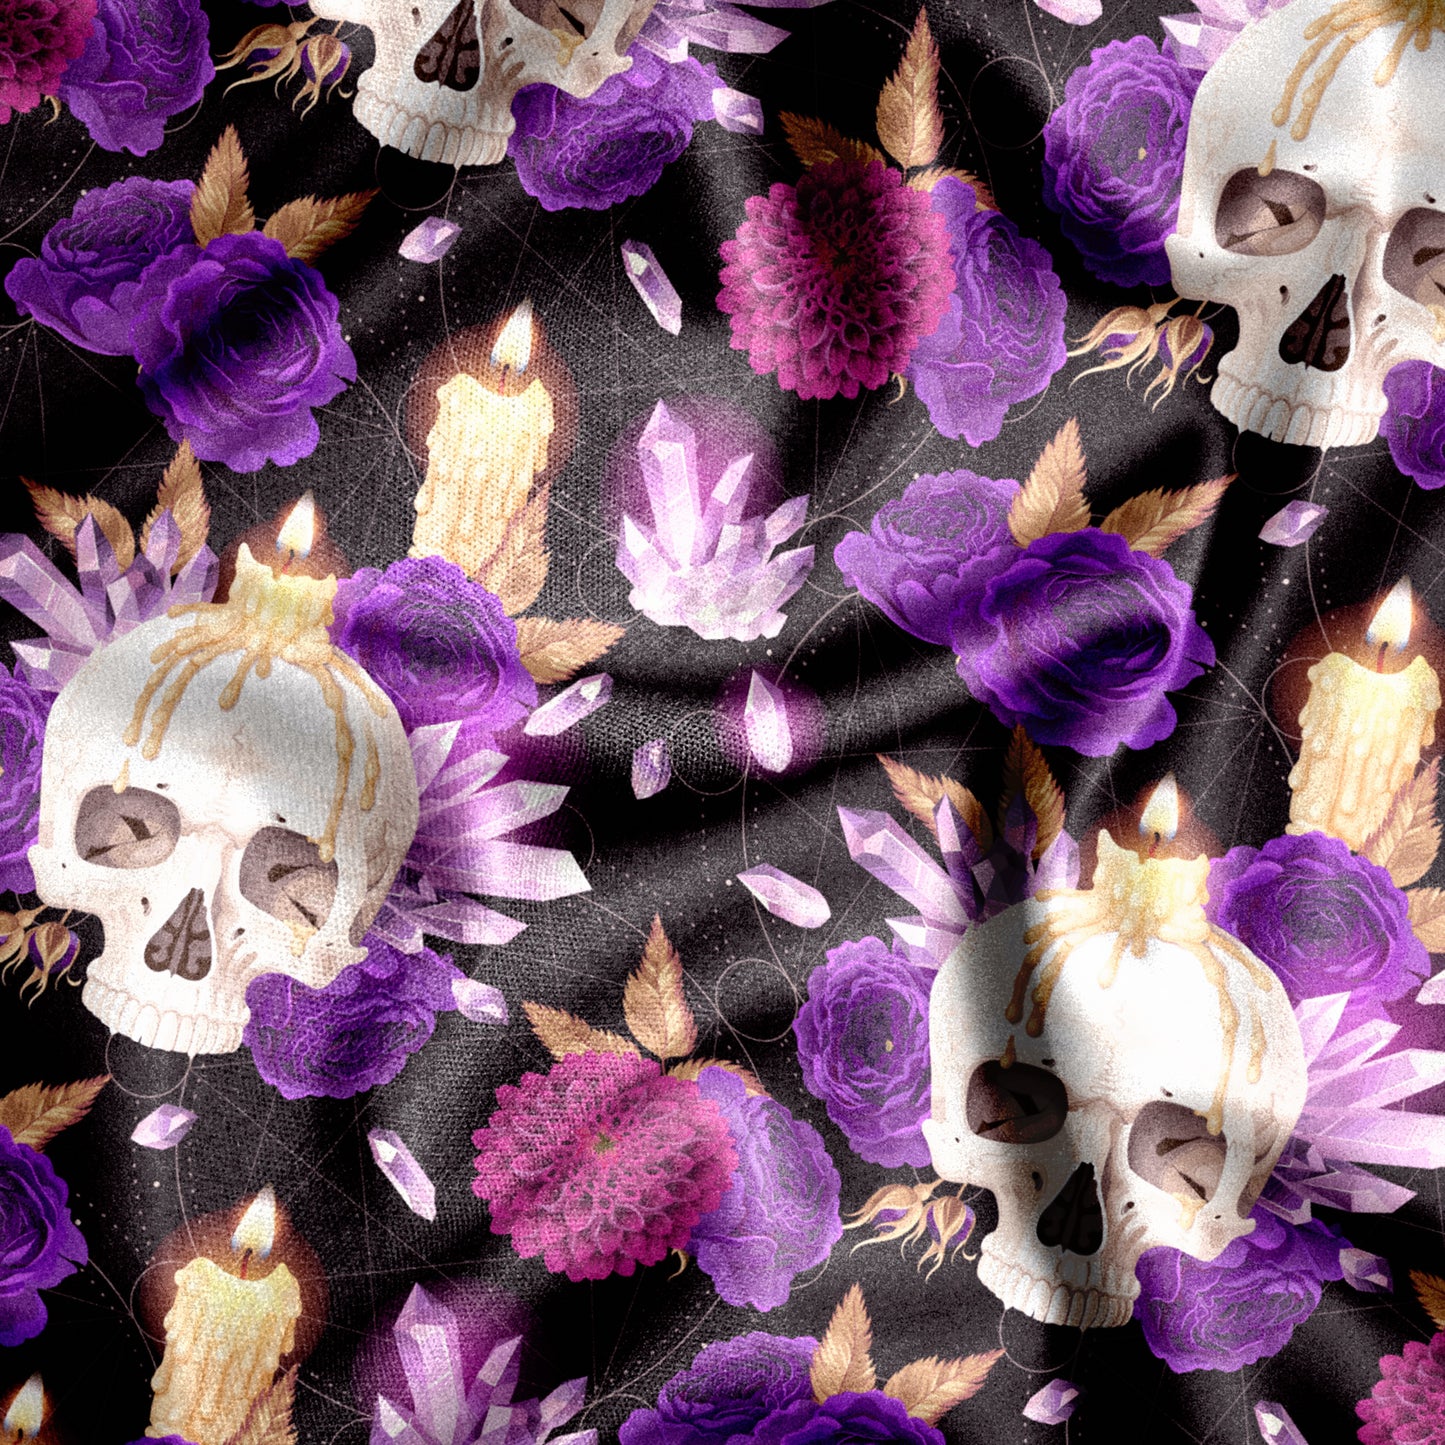 Crystal Skull and roses Long Sleeve buttun-up shirt